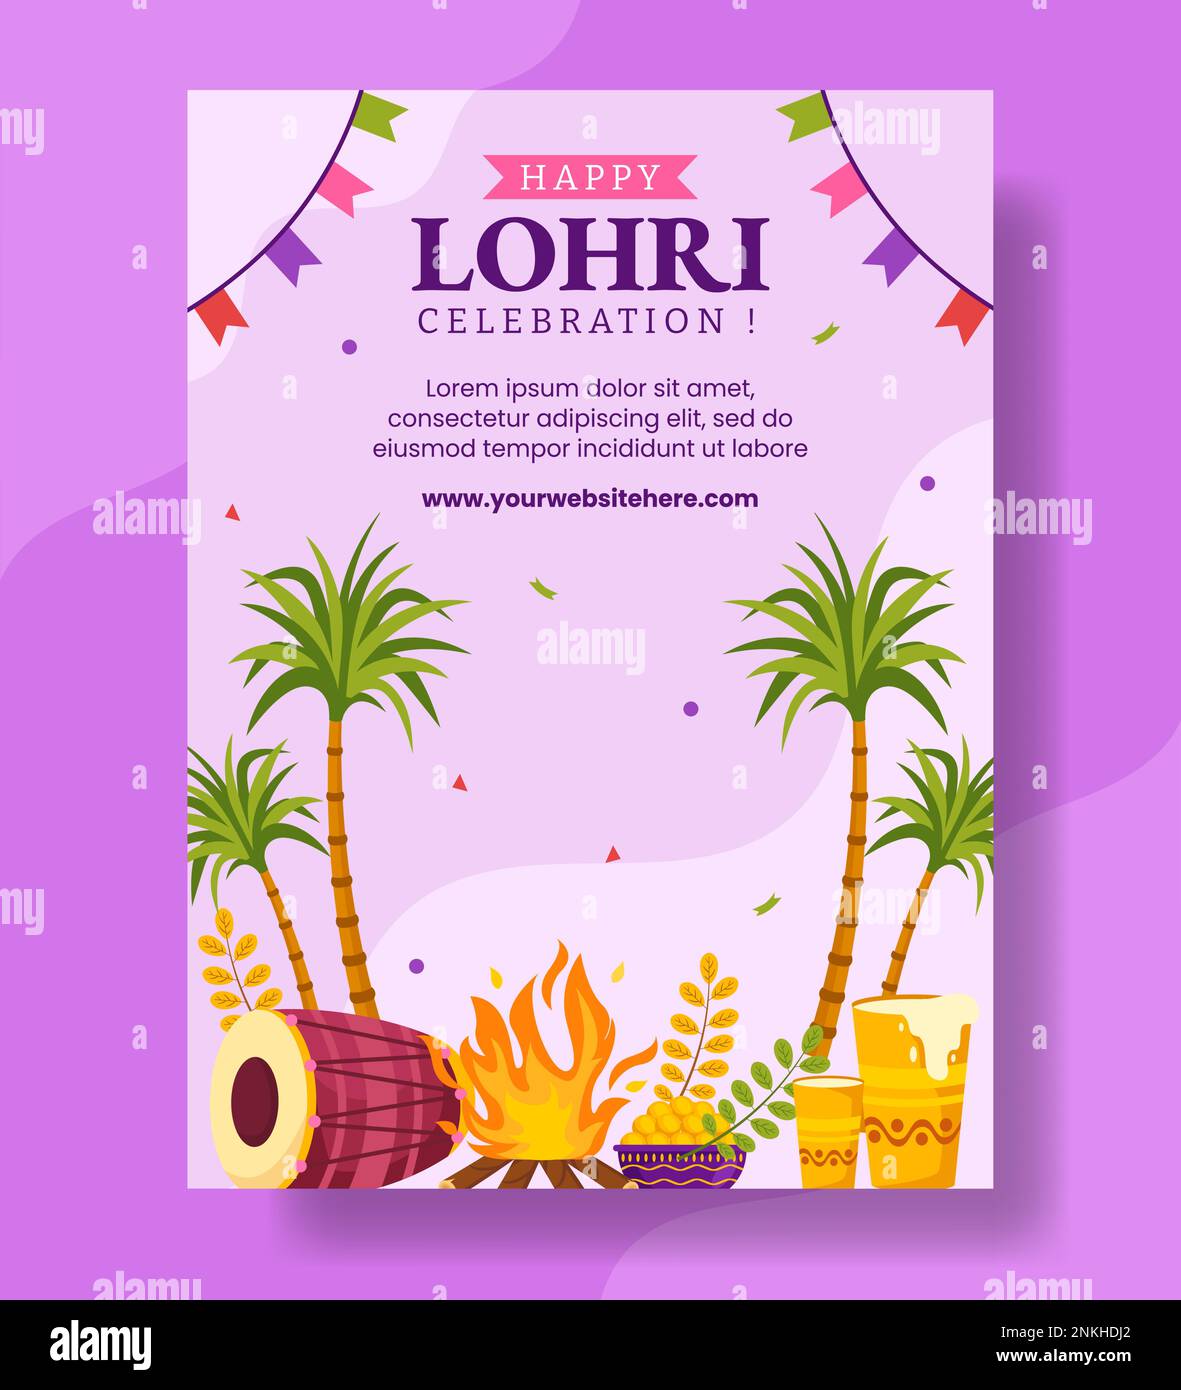 Happy Lohri Festival Vertical Poster Cartoon Hand Drawn Templates Background Illustration Stock Vector